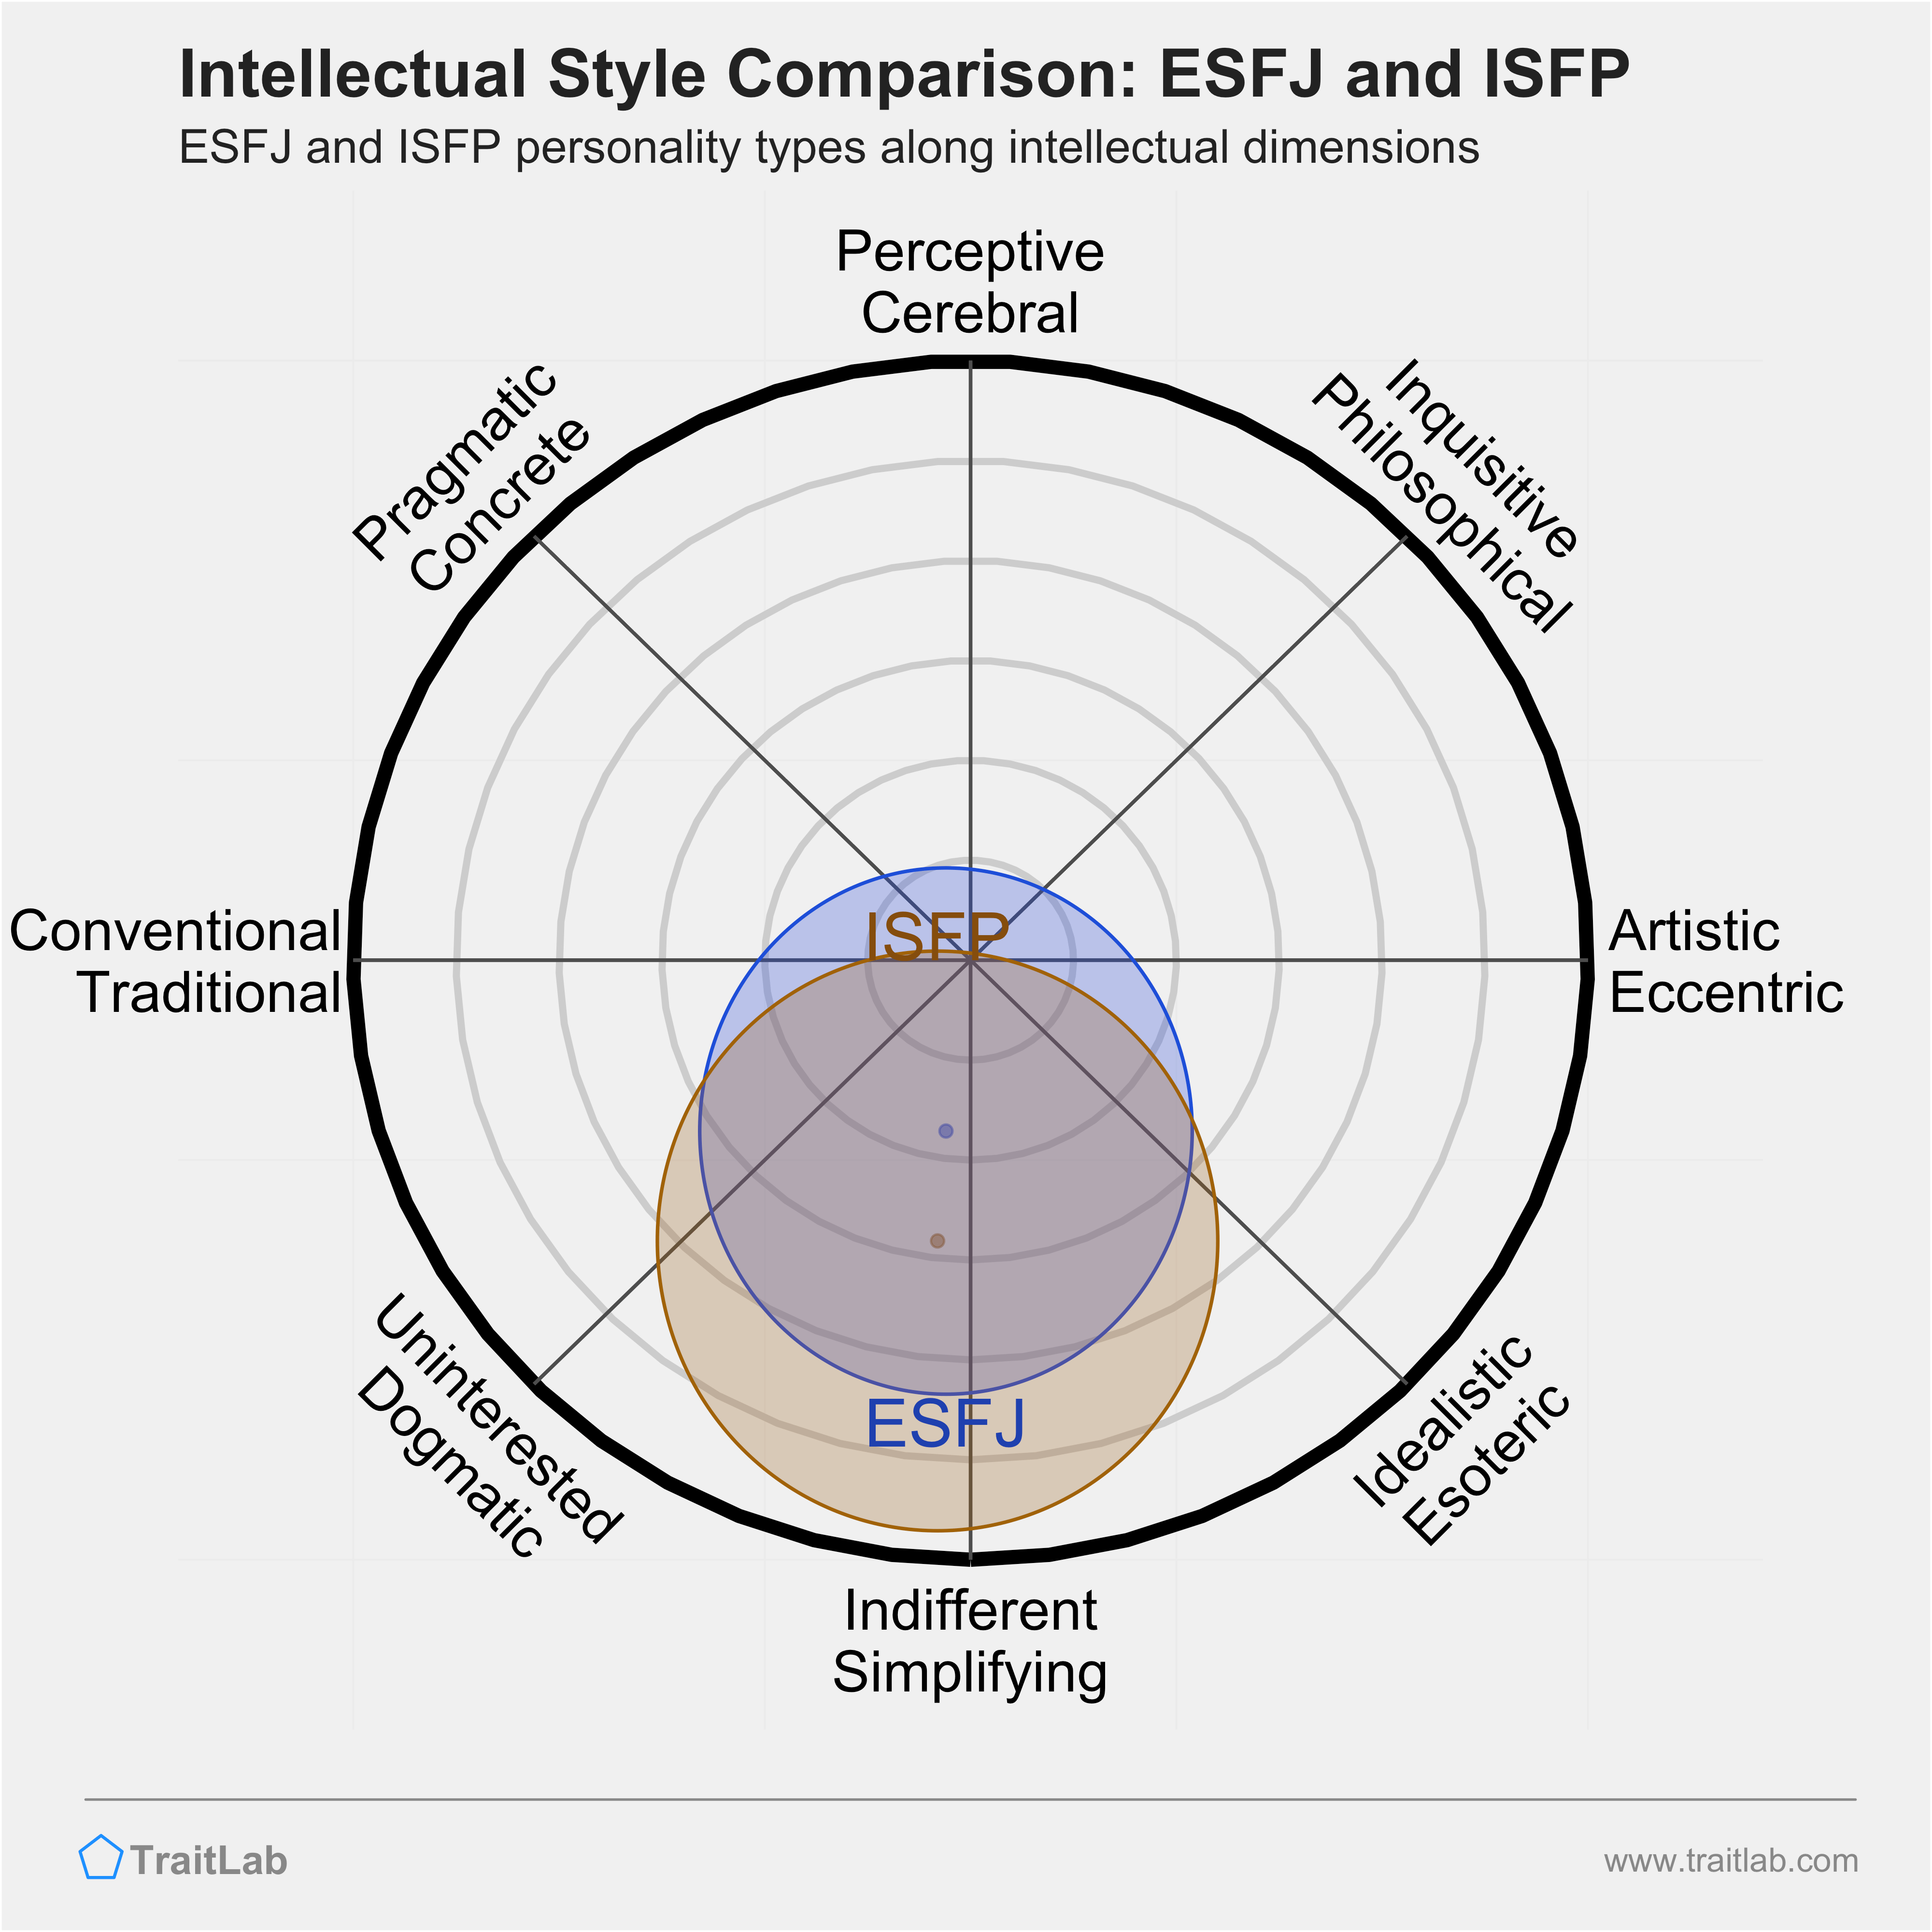 ESFJ and ISFP comparison across intellectual dimensions